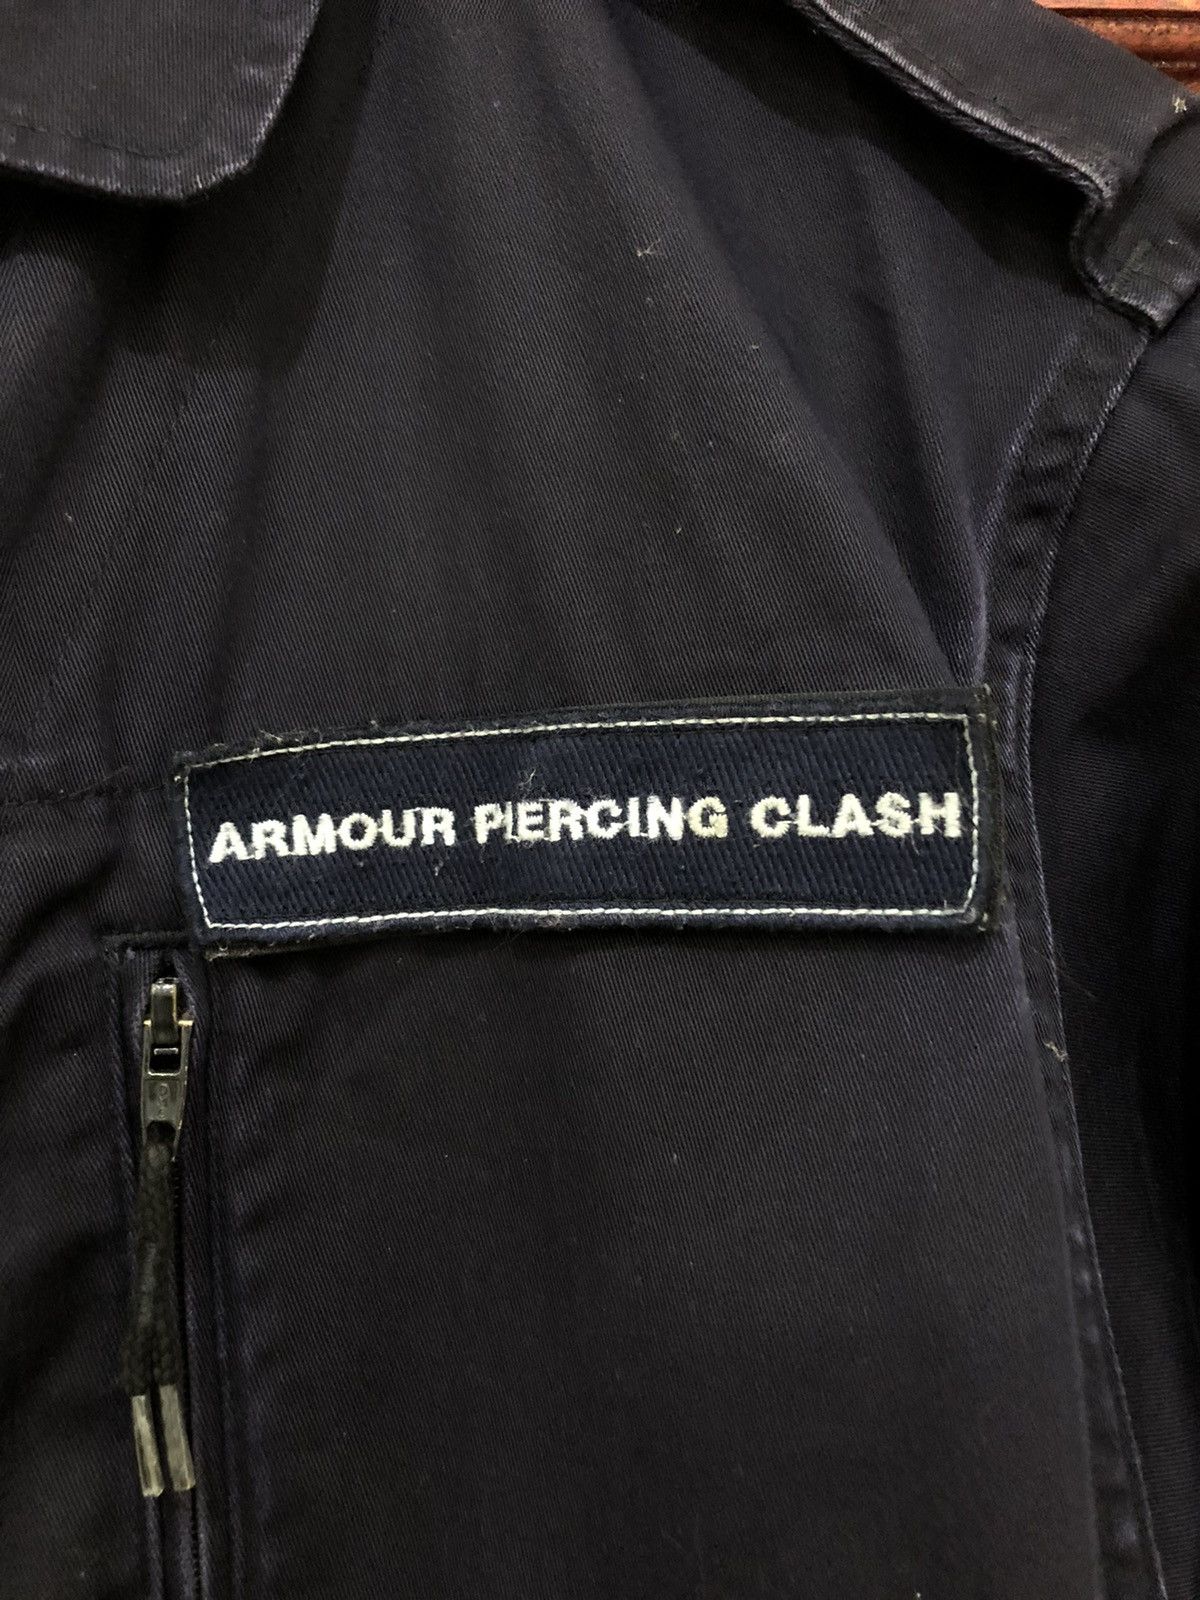 Vintage Armour Piercing Clash 80s Jacket Military Design - 9